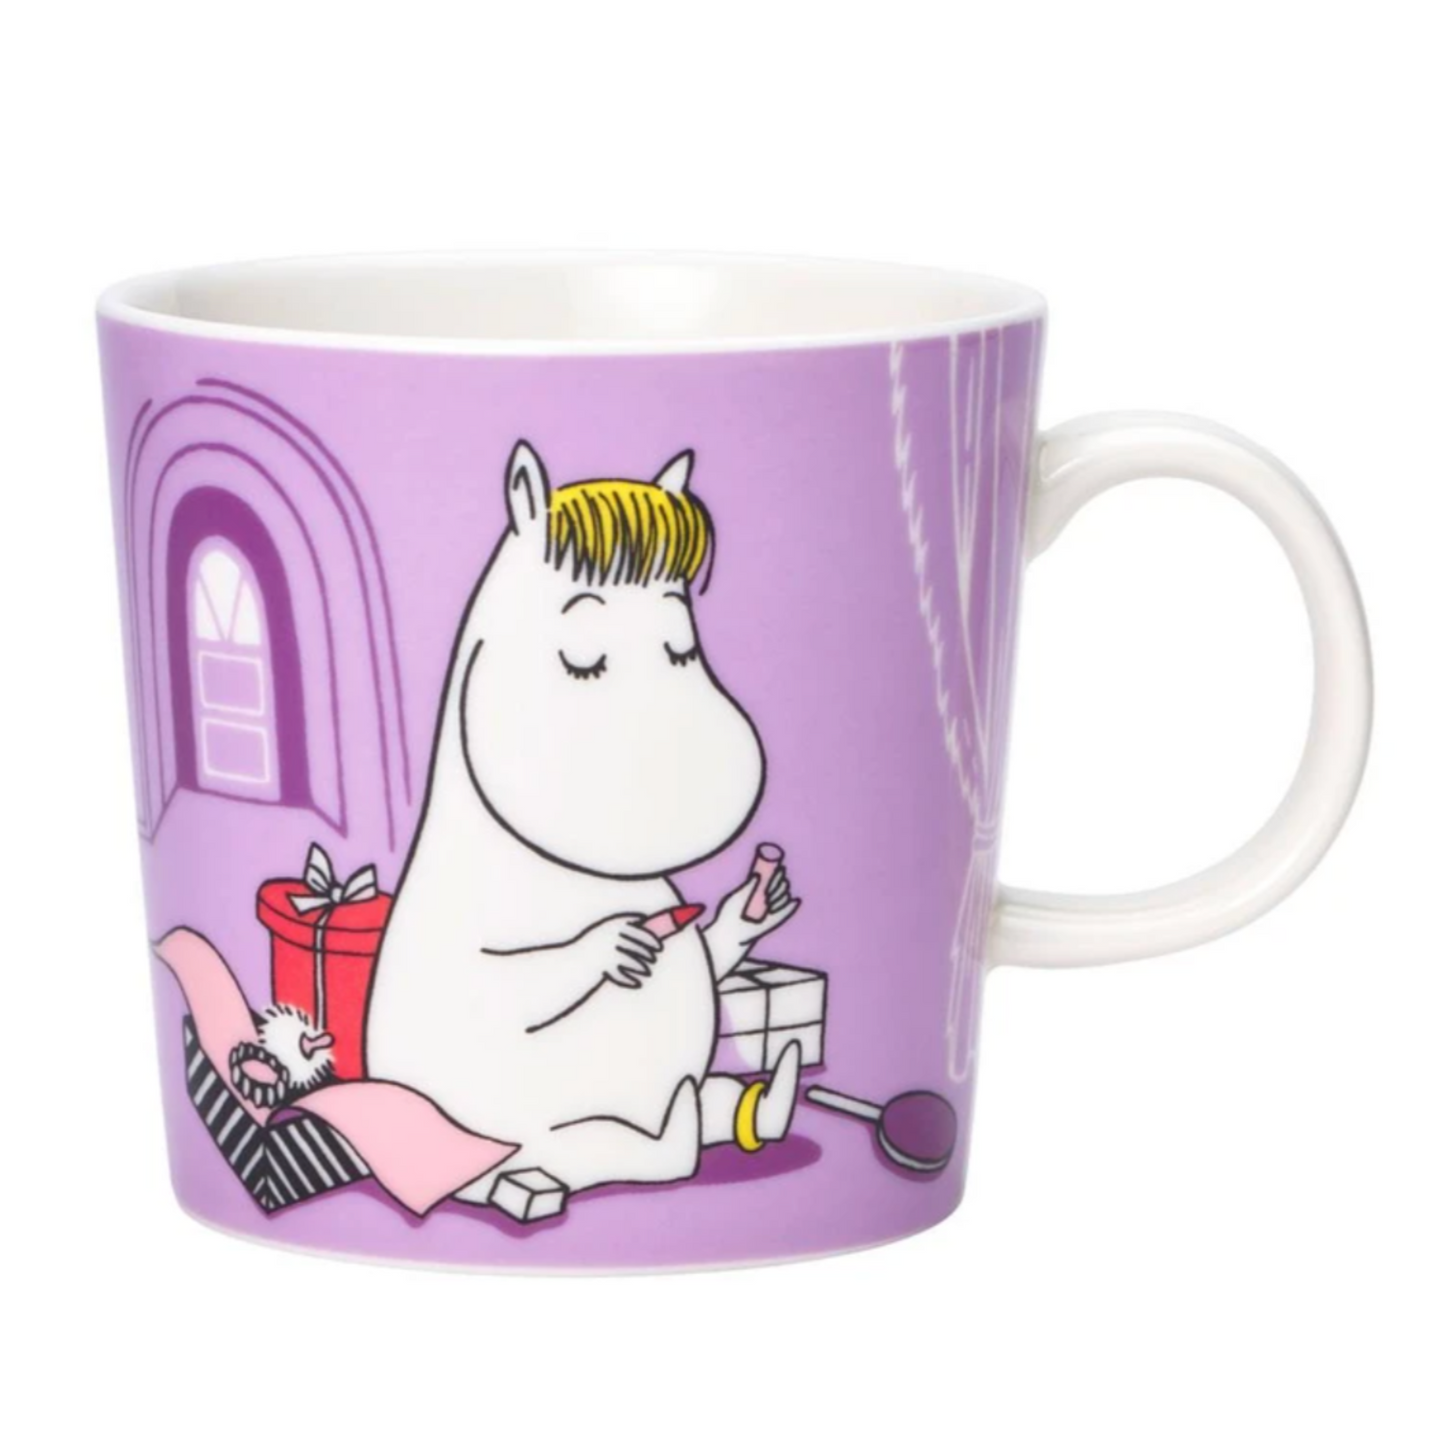 Moomin Mug by Arabia, Snorkmaiden (4580234723393)